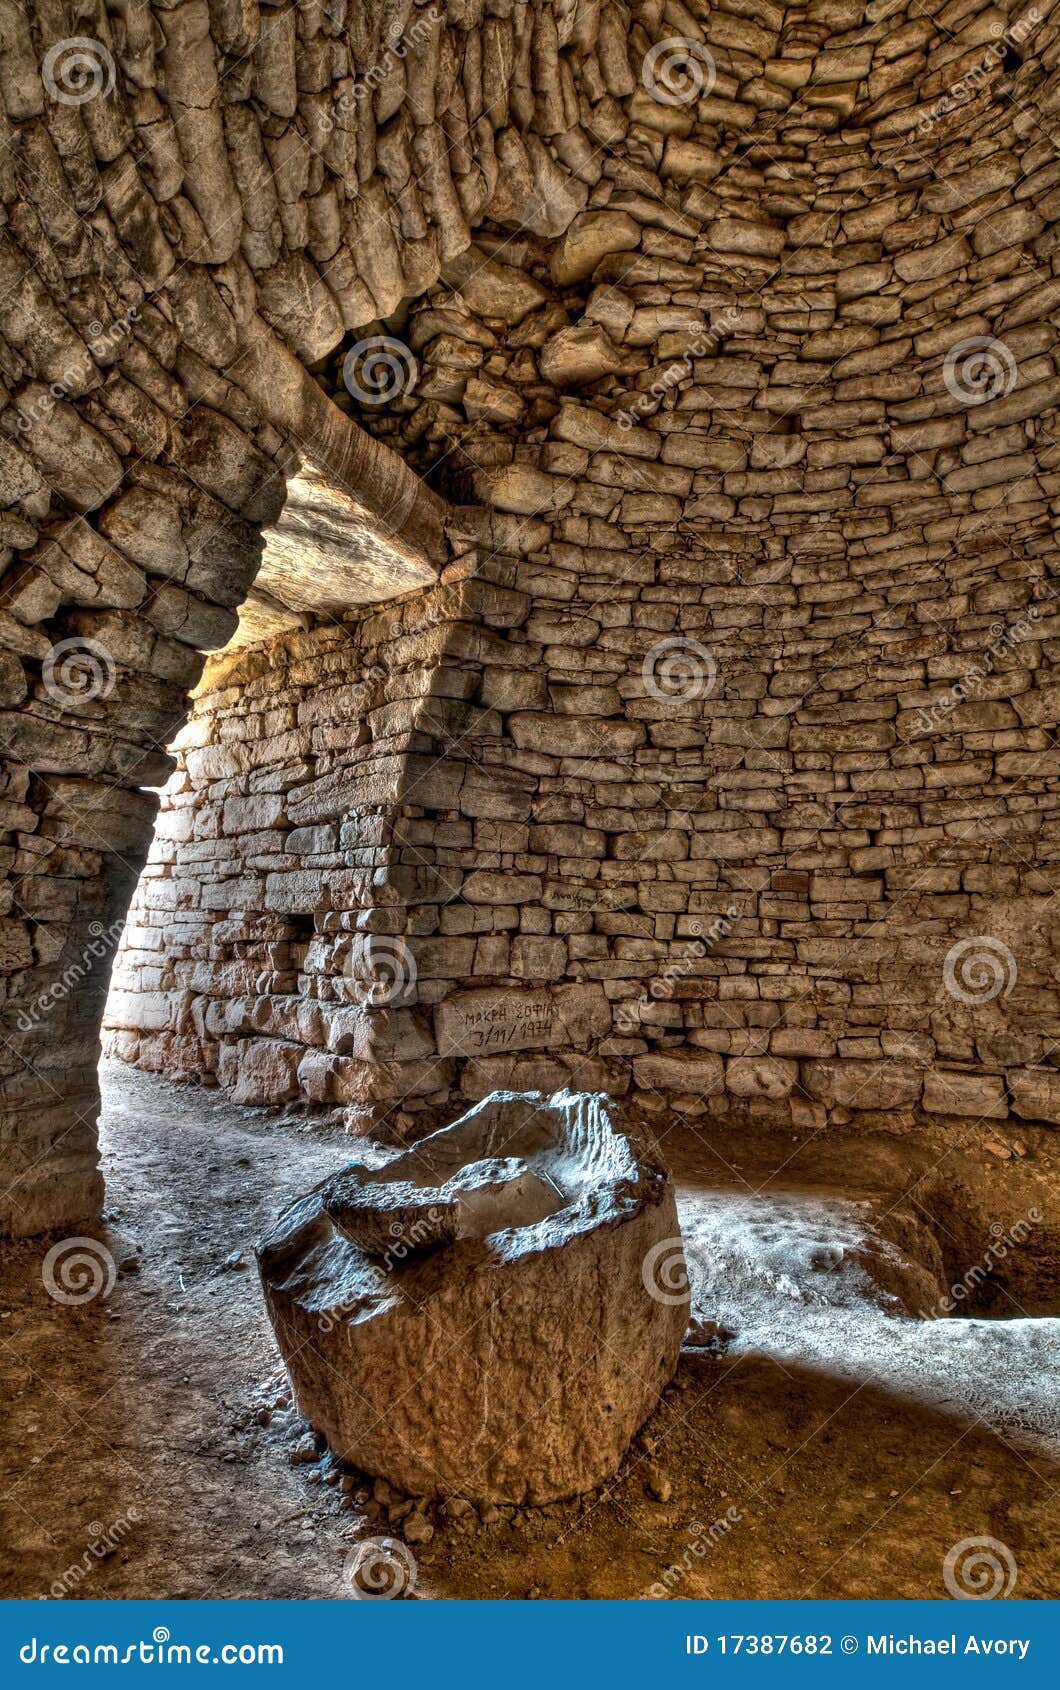 interior of mycenaean burial chamber